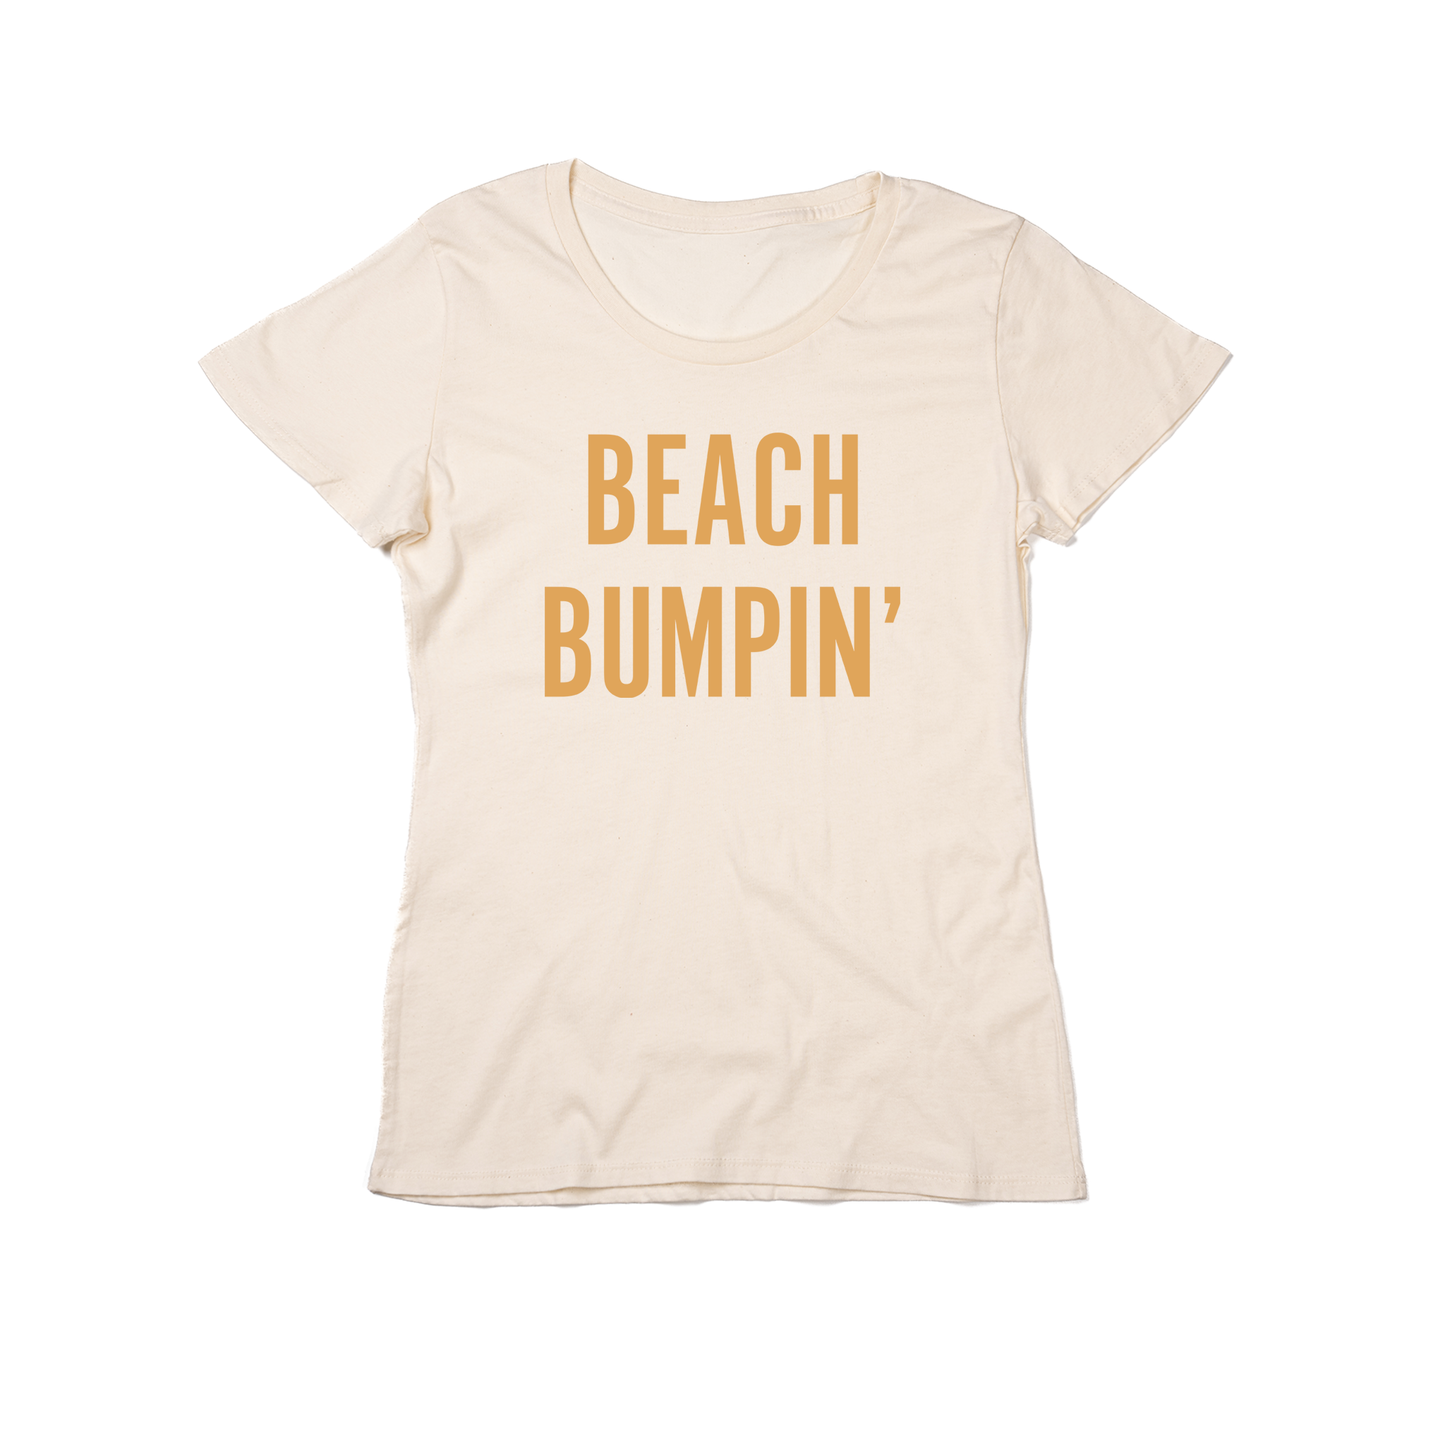 Beach Bumpin' (Mustard) - Women's Fitted Tee (Natural)